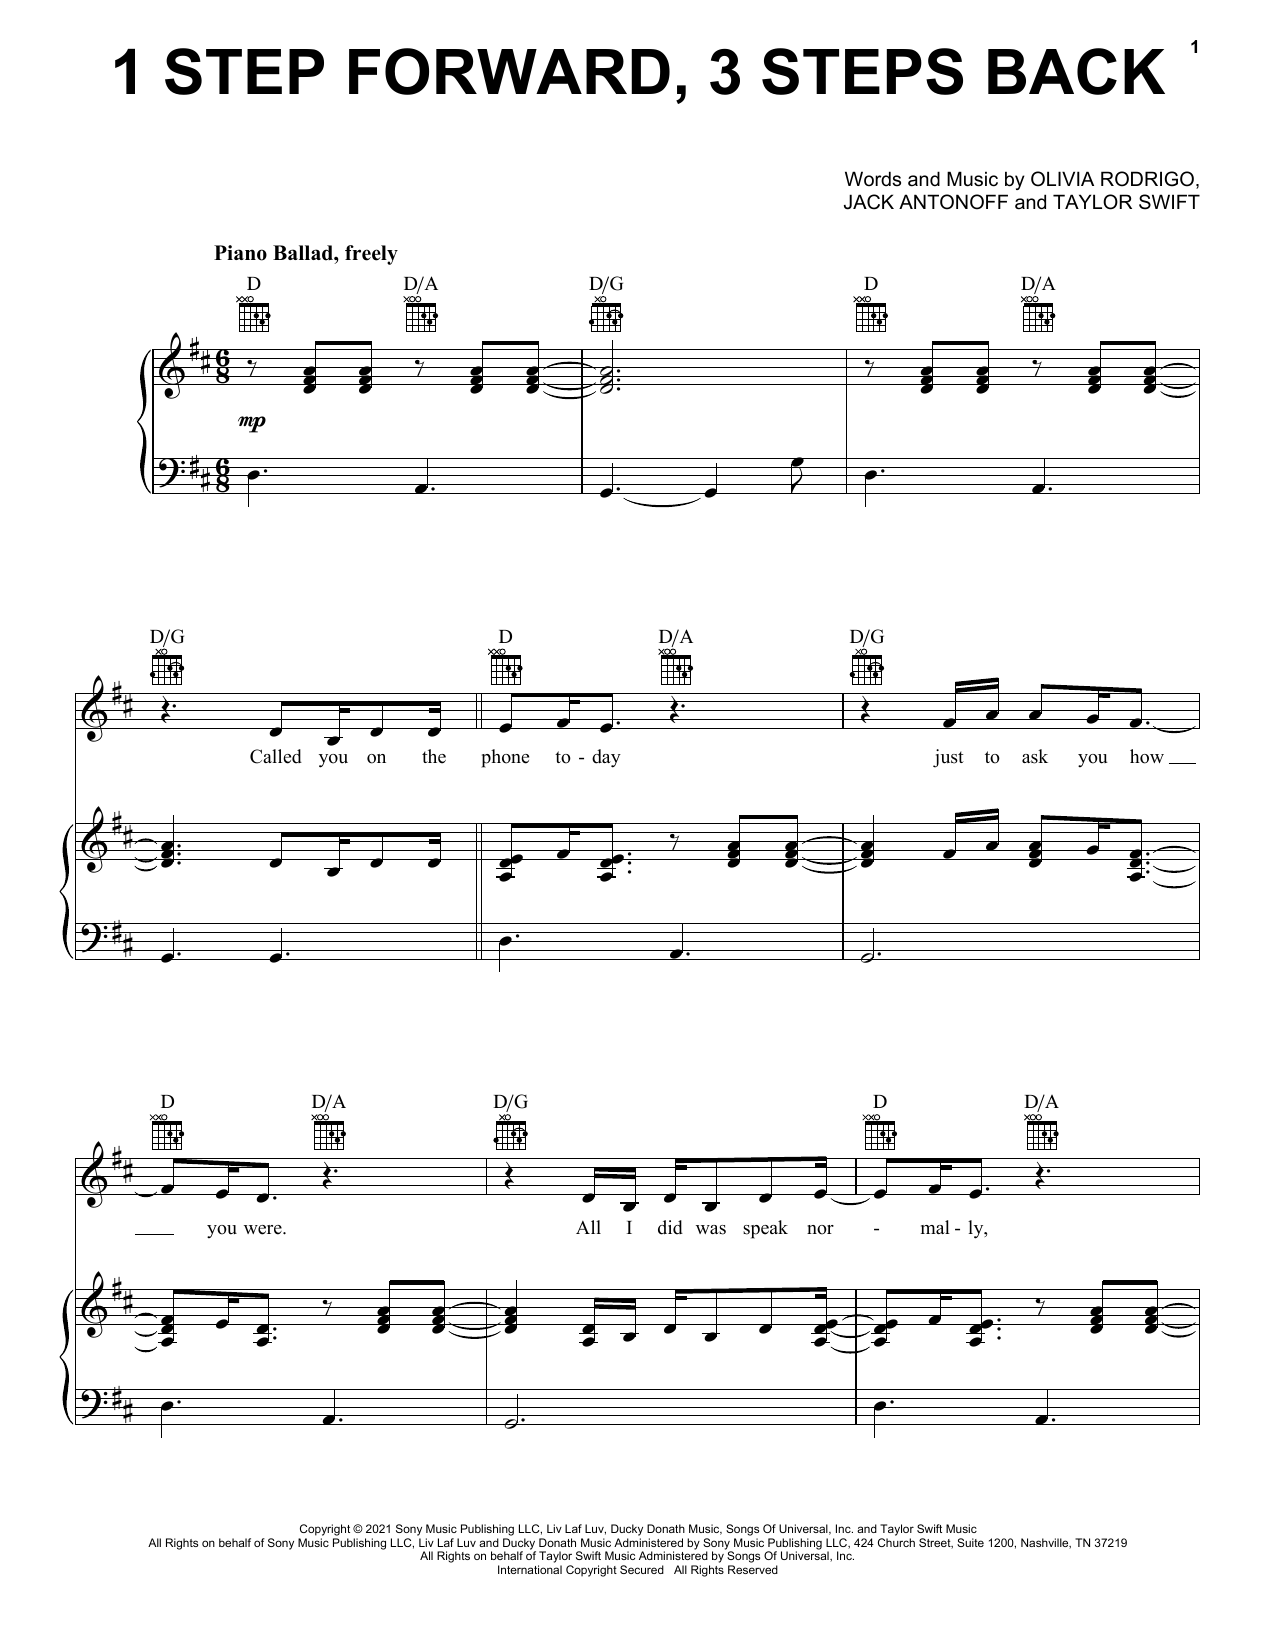 Olivia Rodrigo 1 step forward, 3 steps back Sheet Music Notes & Chords for Piano, Vocal & Guitar (Right-Hand Melody) - Download or Print PDF